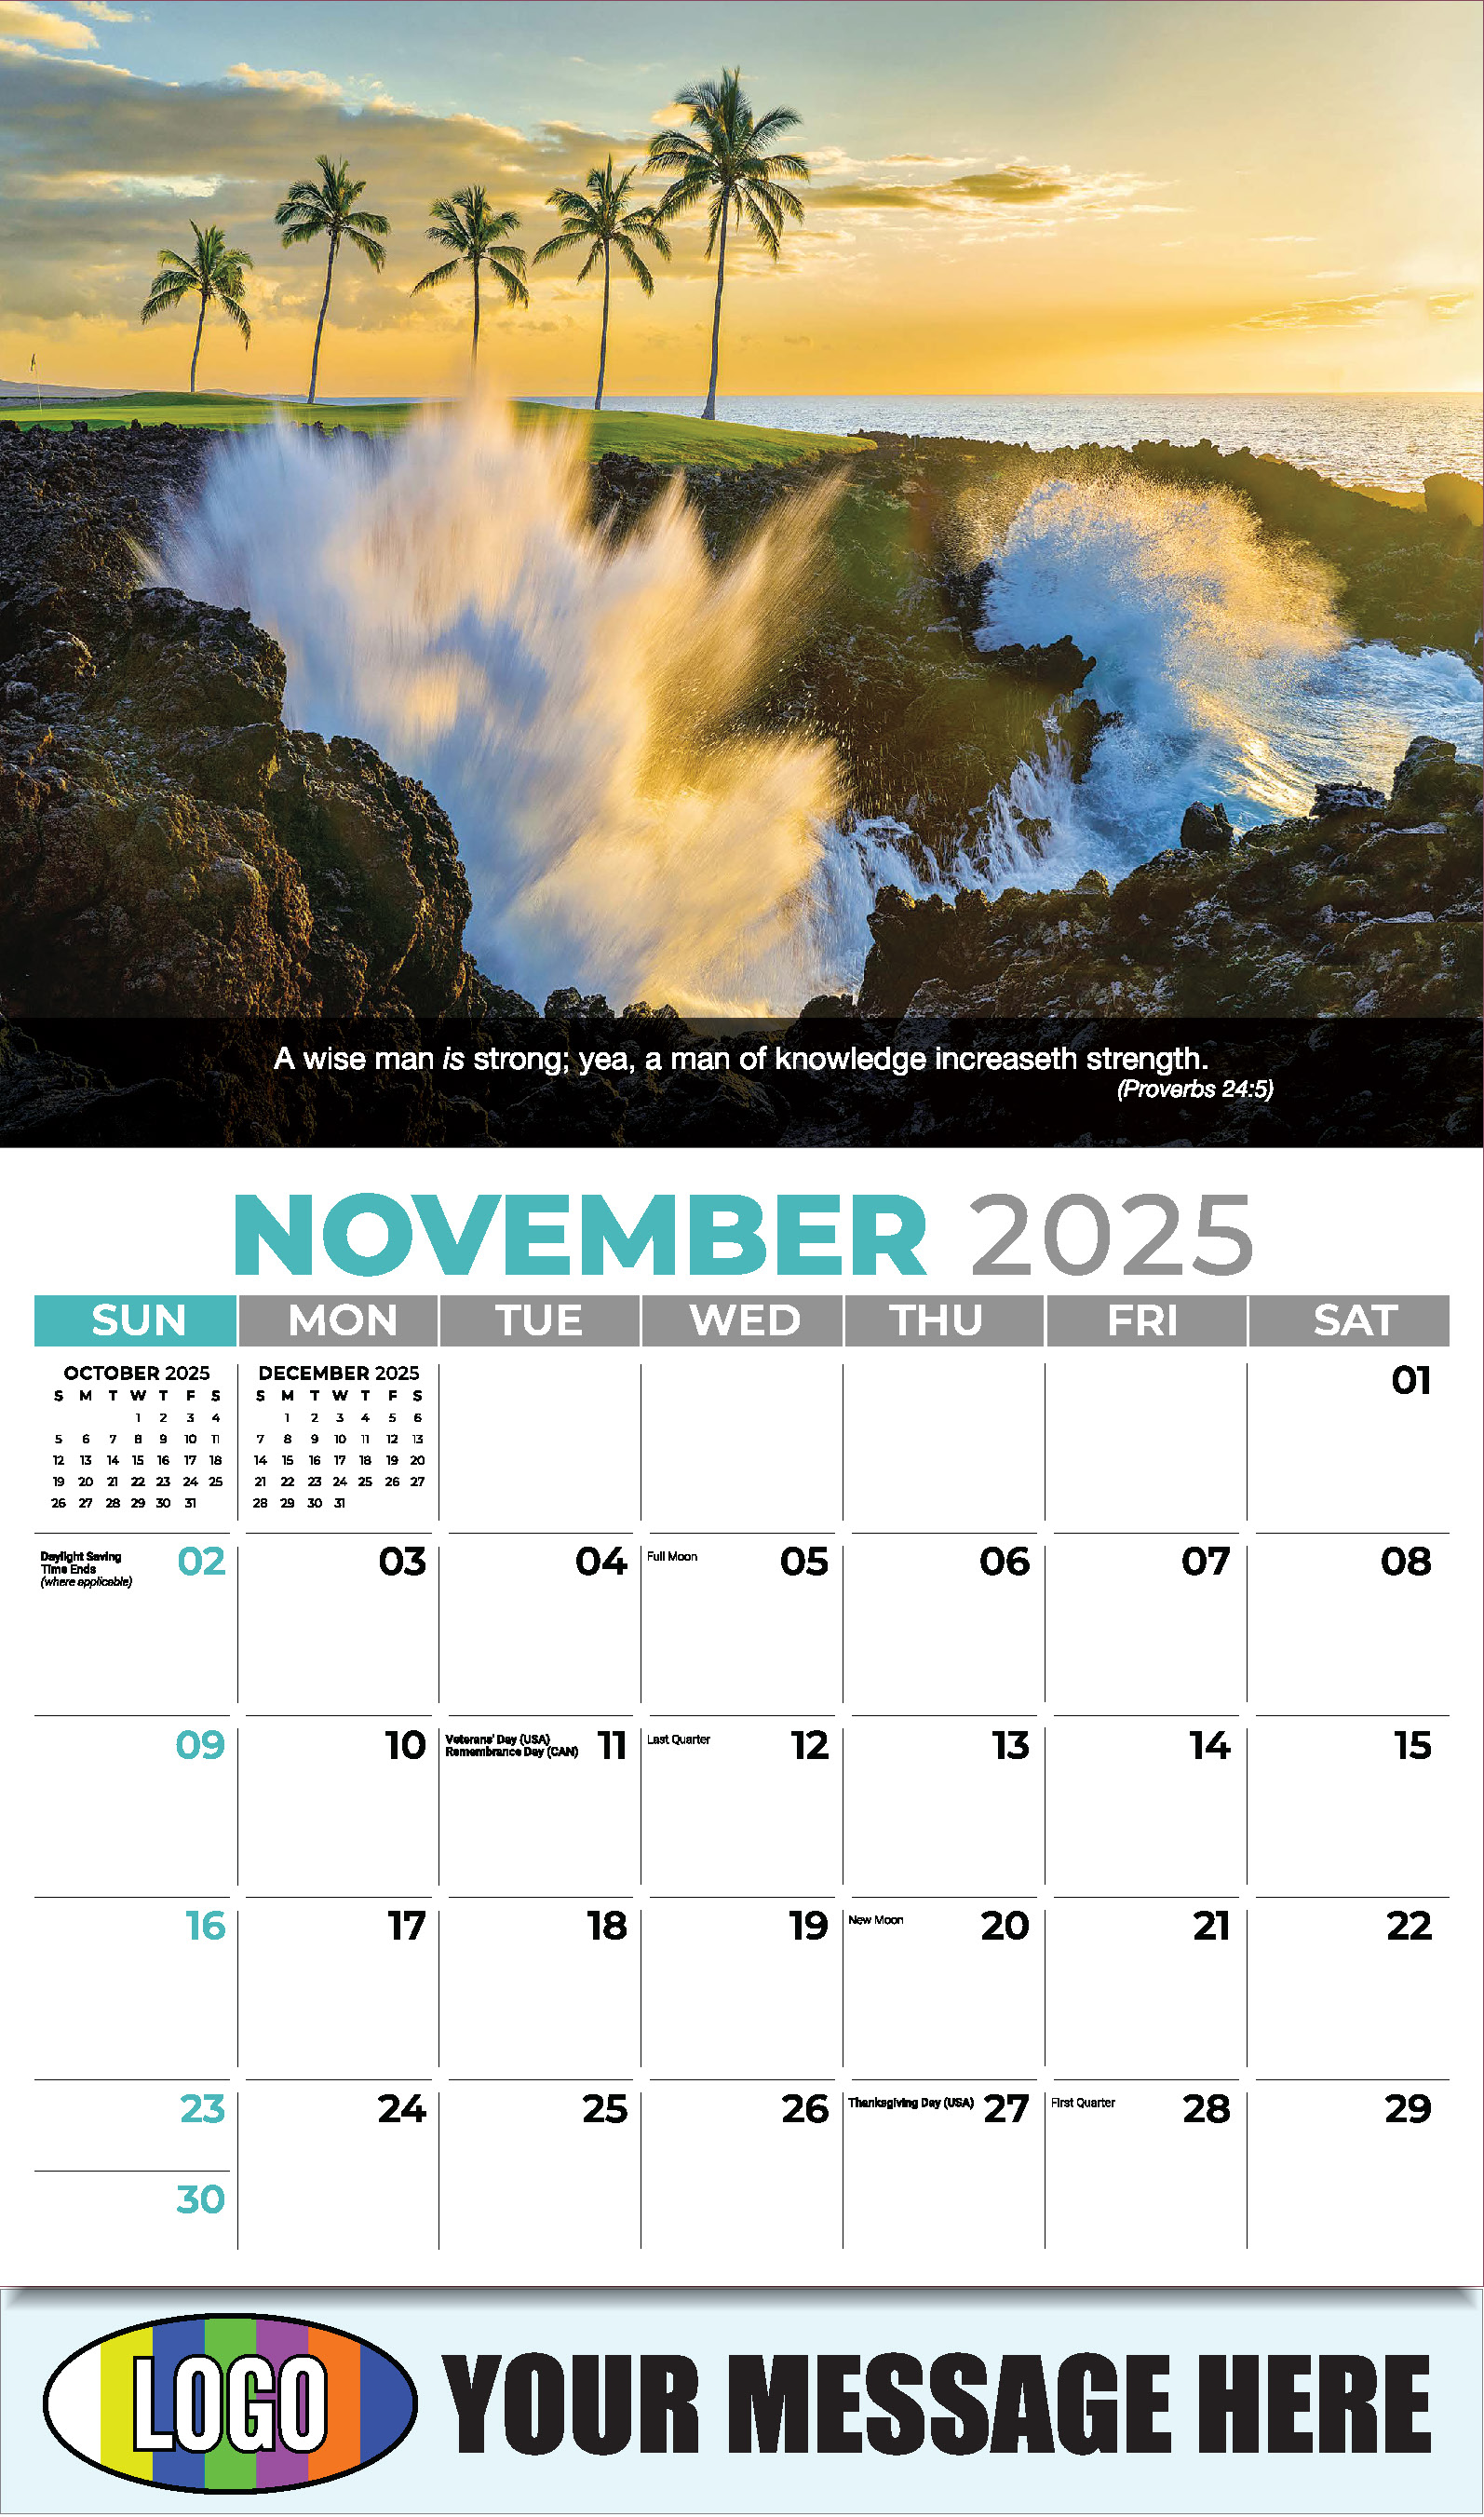 Faith Passages 2025 Christian Business Advertising Calendar - November